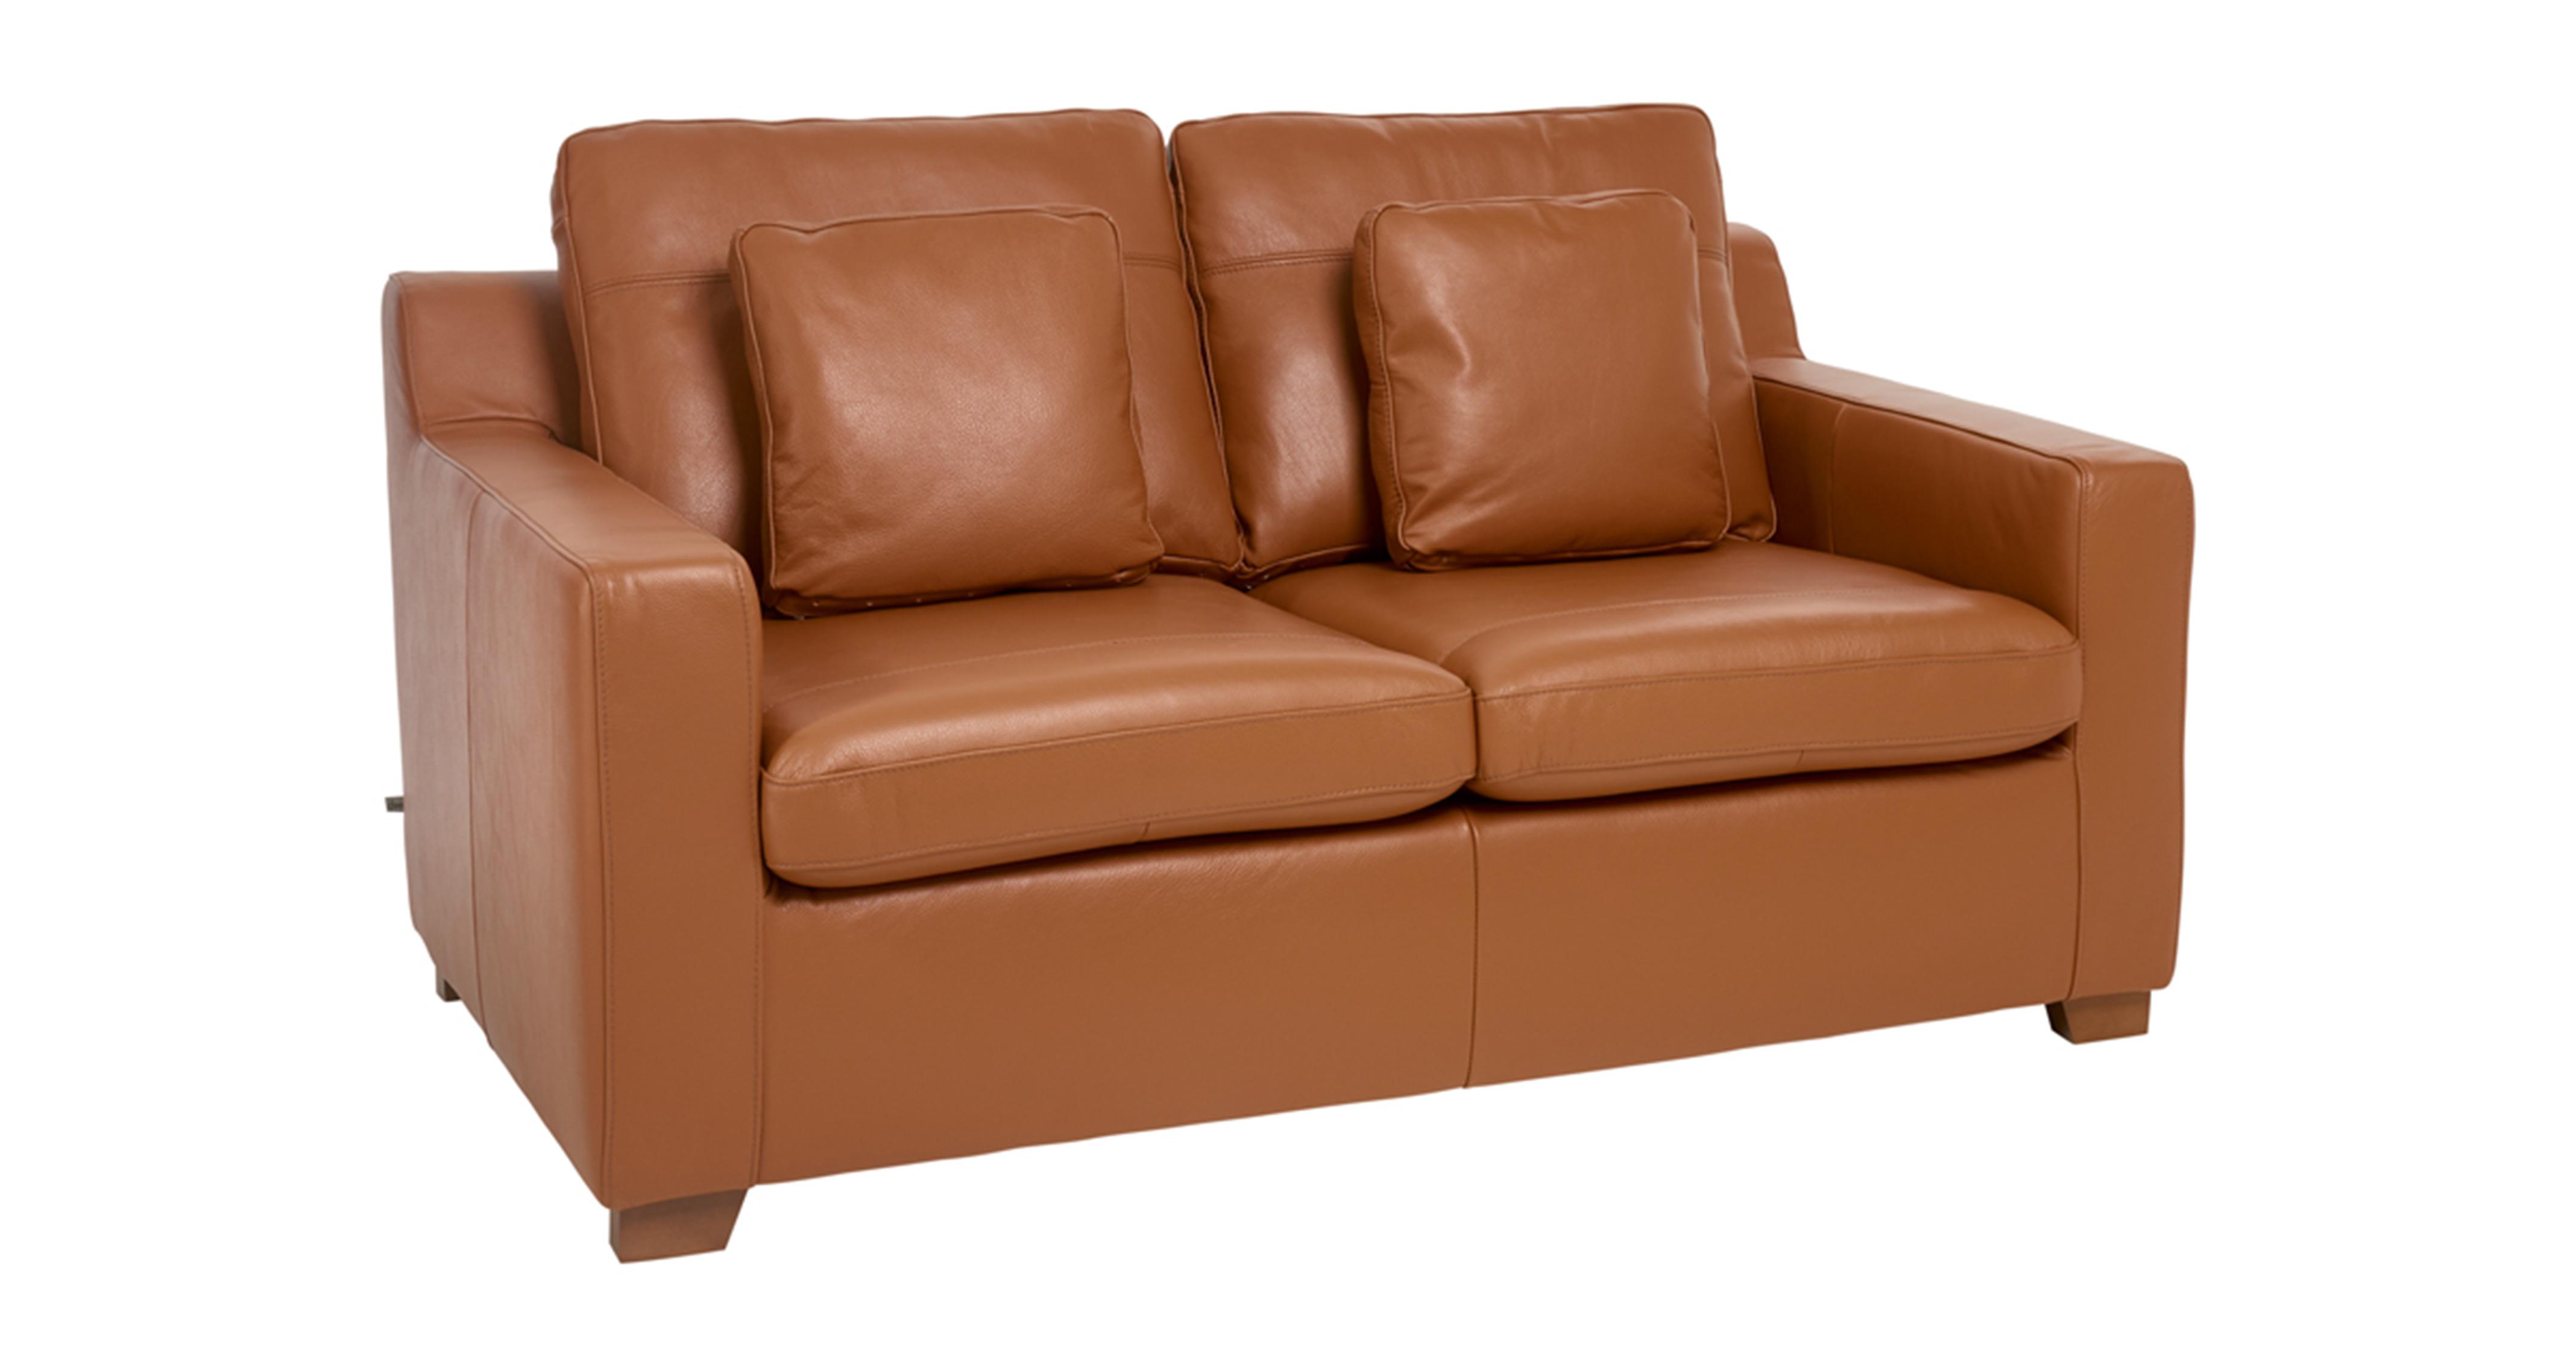 2 seater leather sofa bed ikea